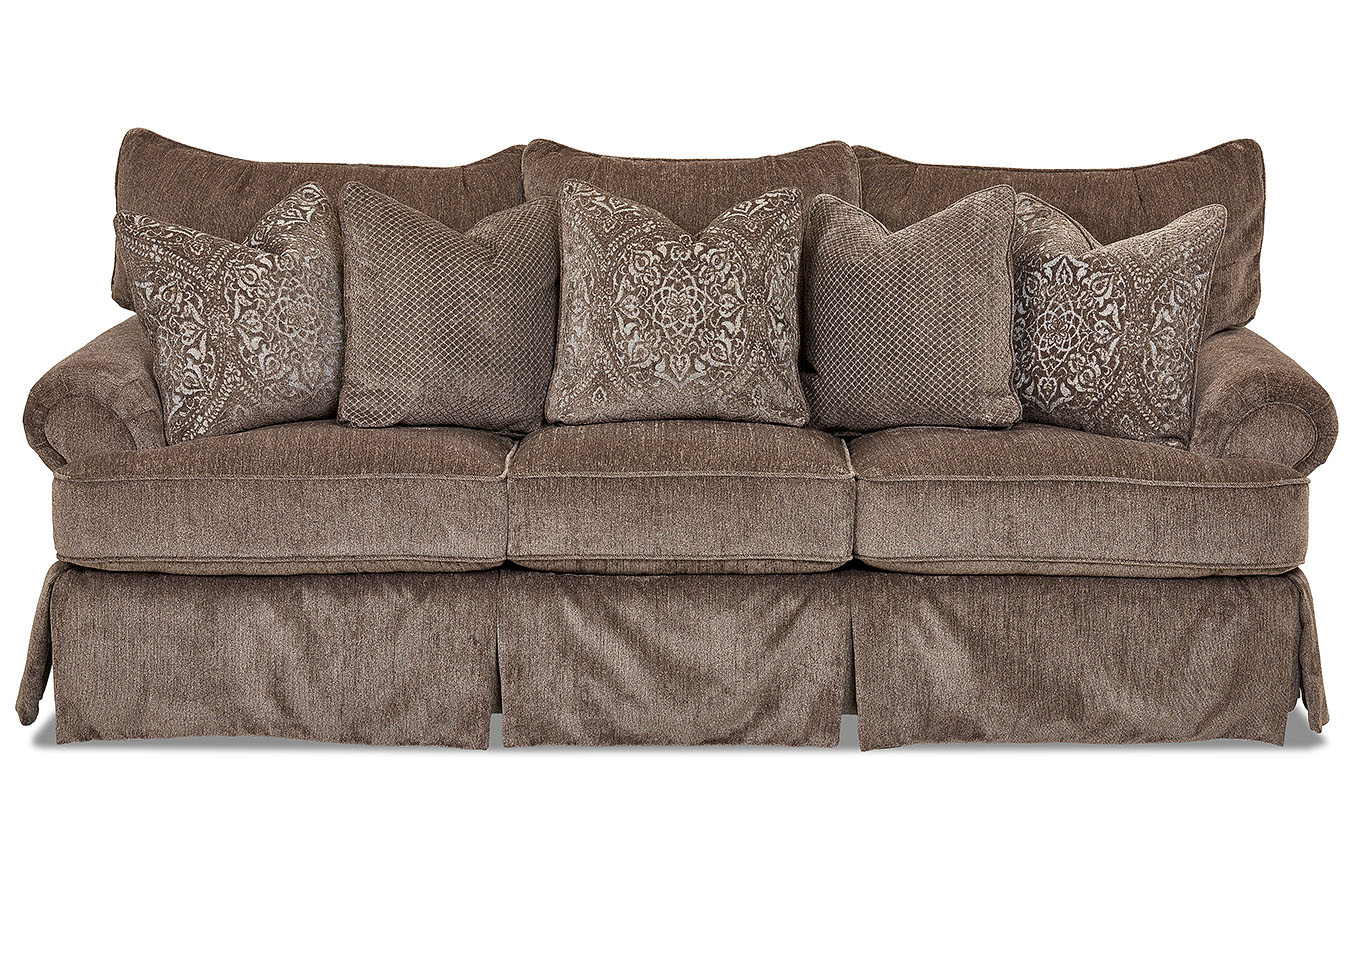 Audrey Dark Brown Stationary Fabric Sofa,Klaussner Home Furnishings